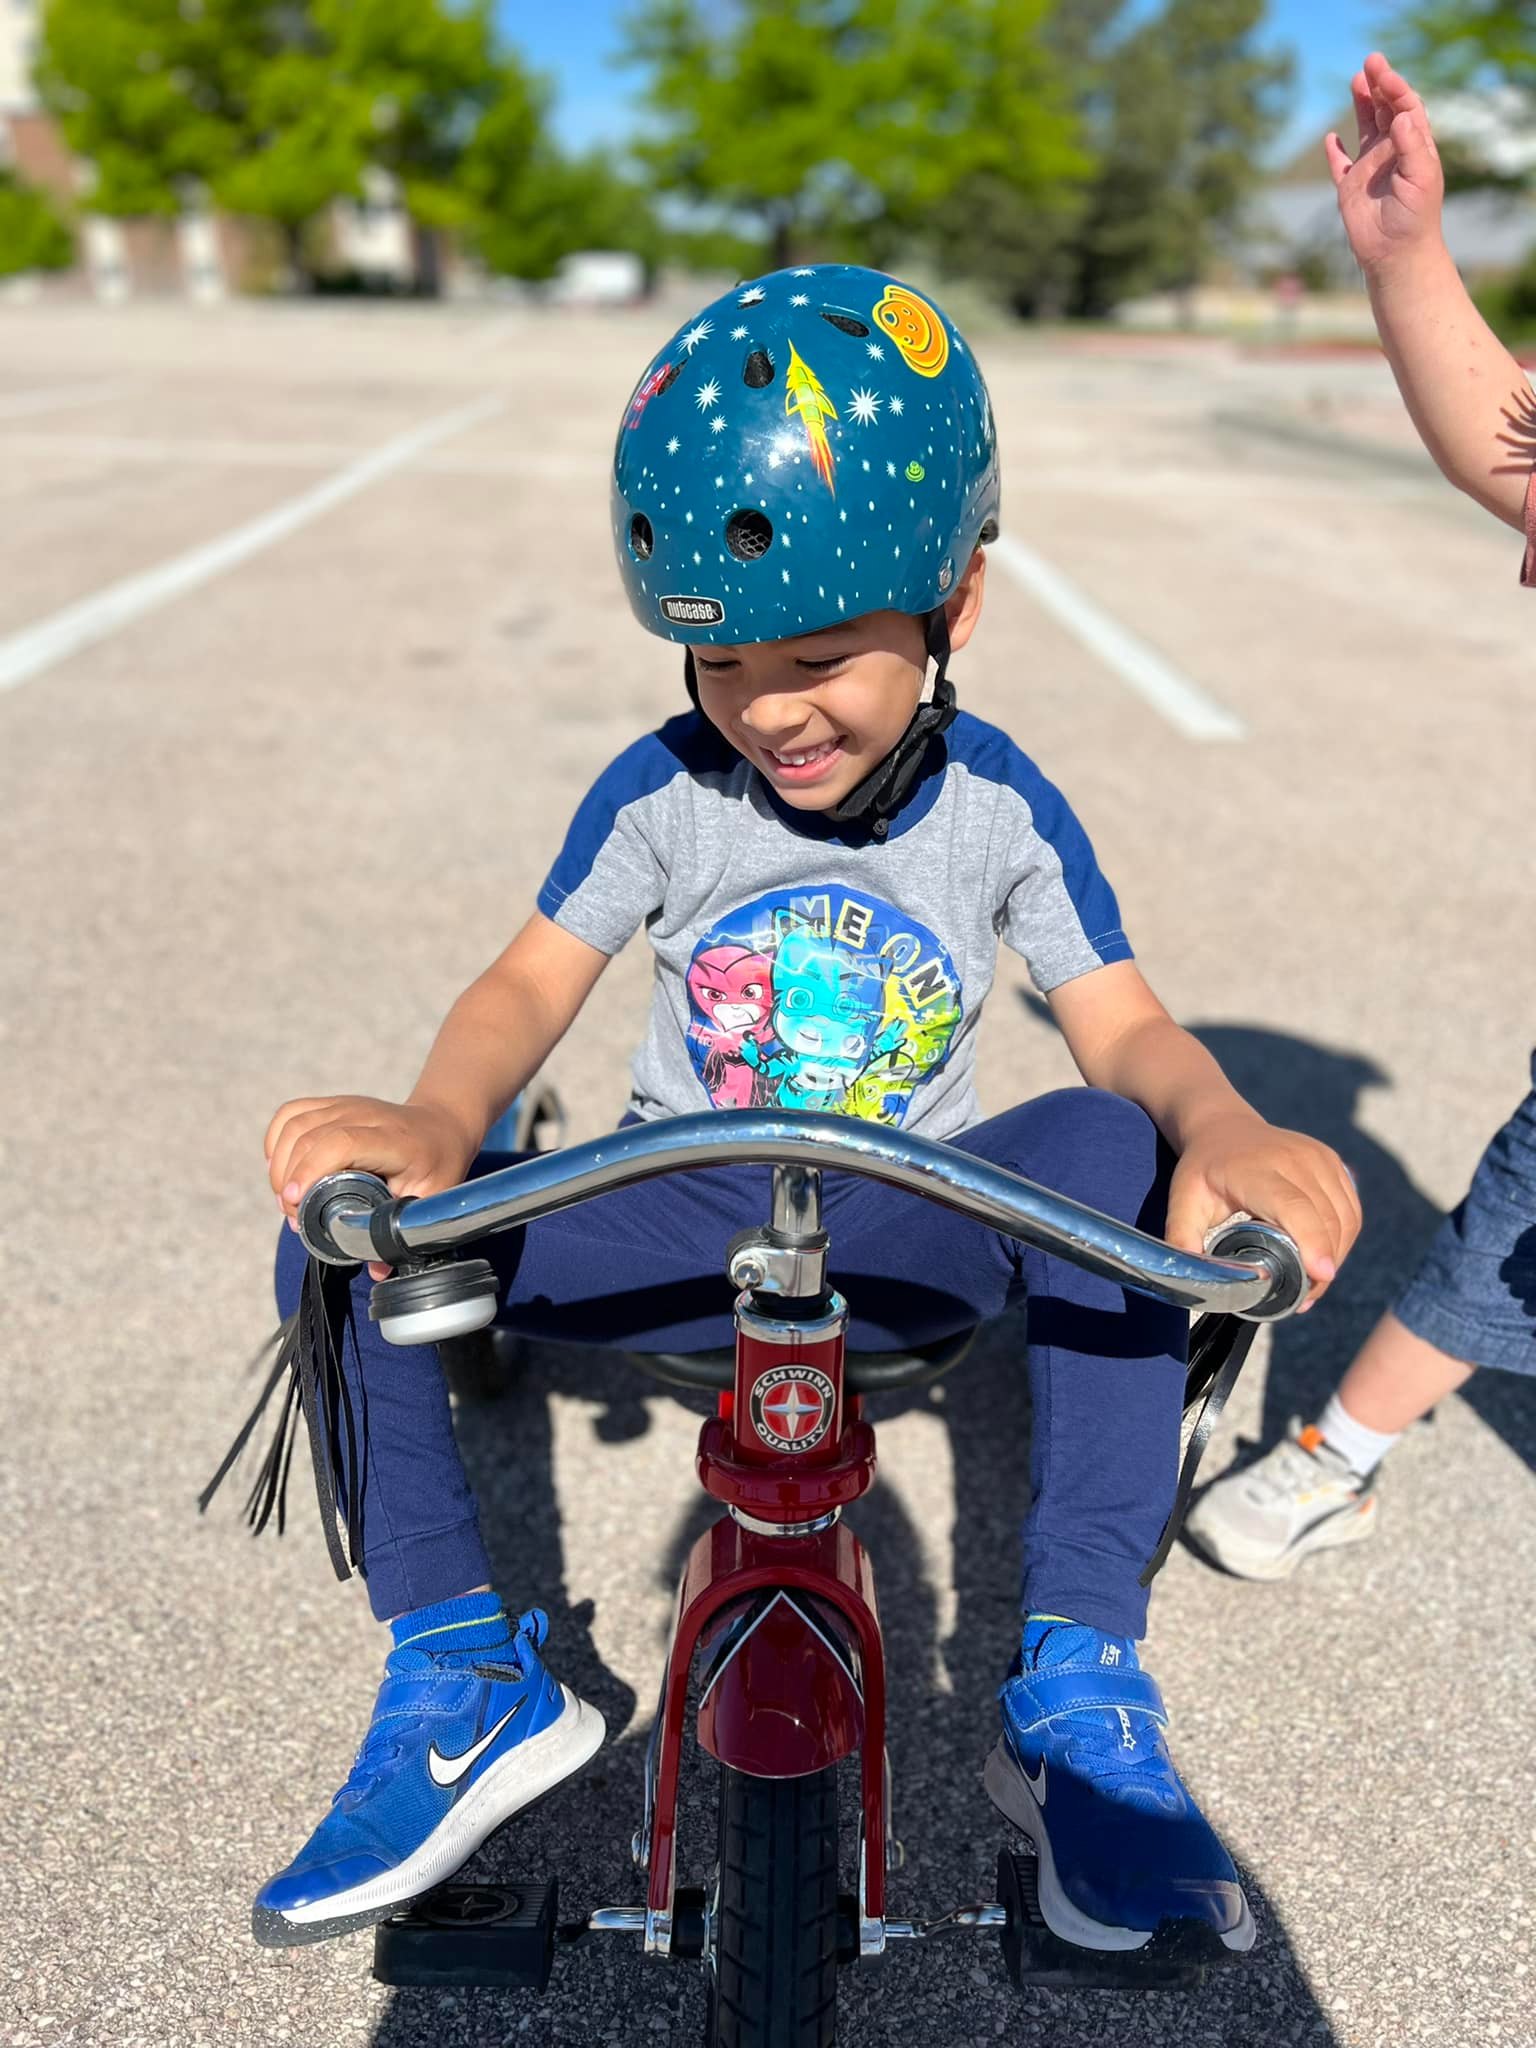 Child riding bike